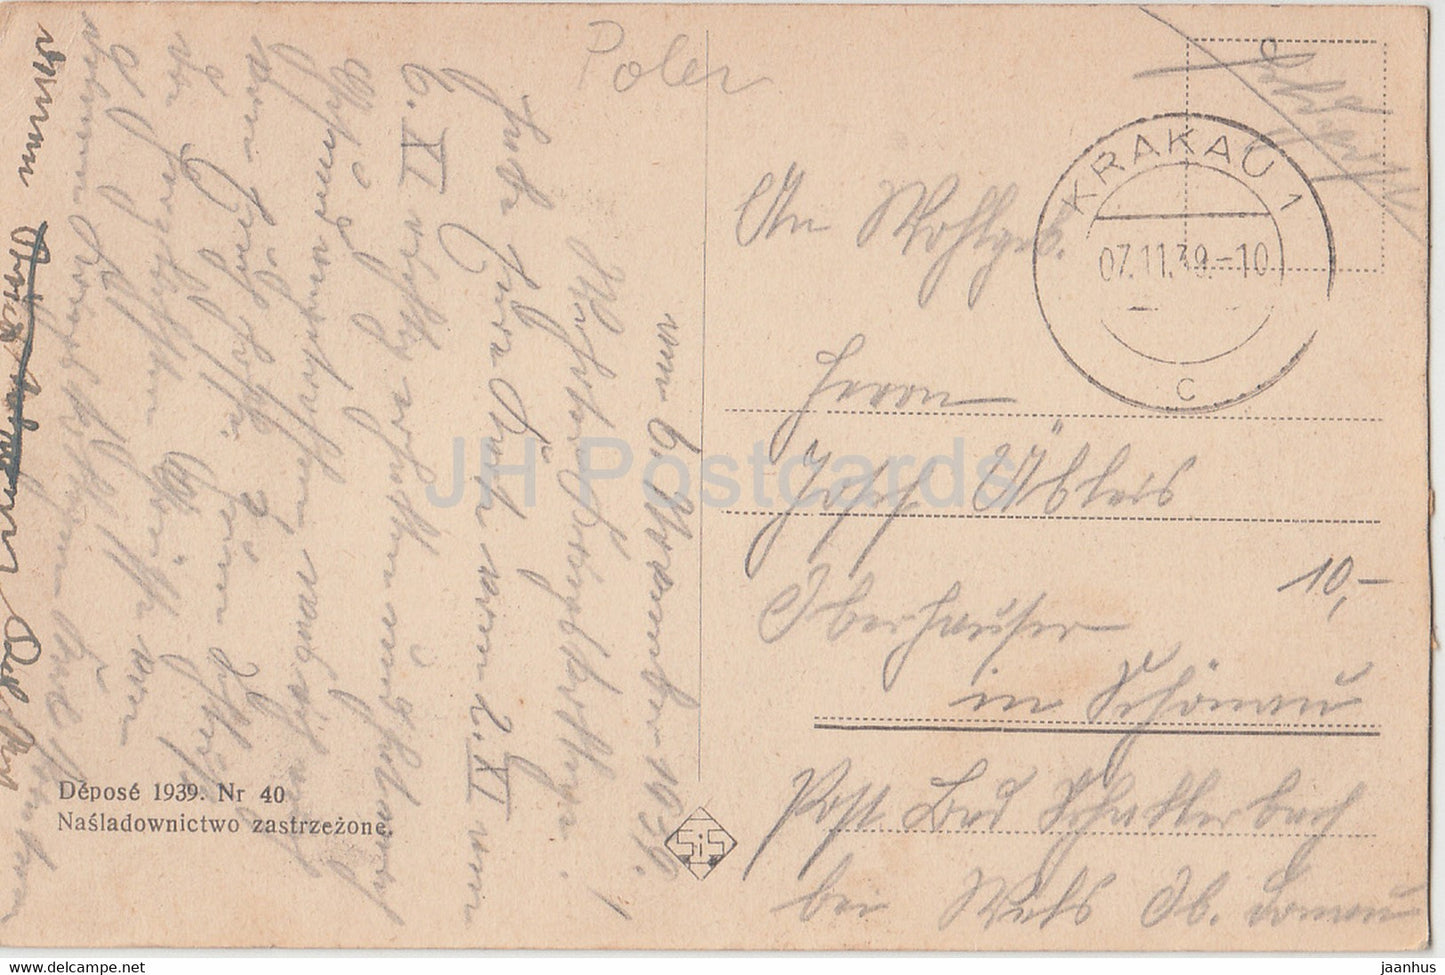 Cracovie - Sukiennice - Tuchhaus - Feldpost - carte postale ancienne - 1939 - Pologne - utilisé